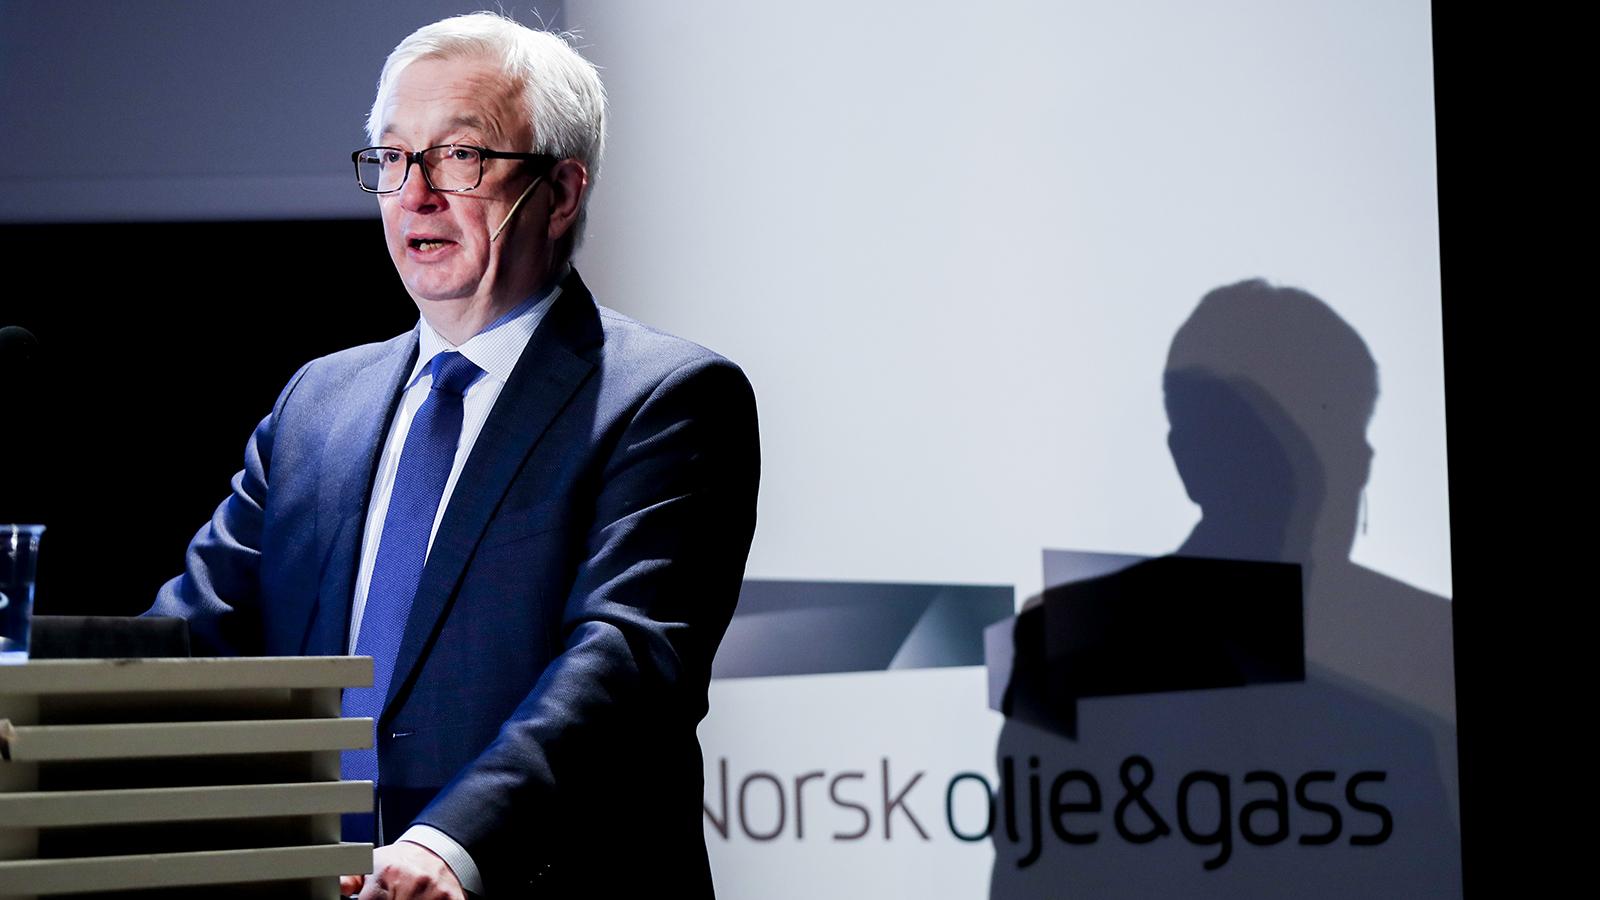 Wade hellige Bliver til Knut Thorvaldsen blir midlertidig leder for Norsk olje og gass – E24